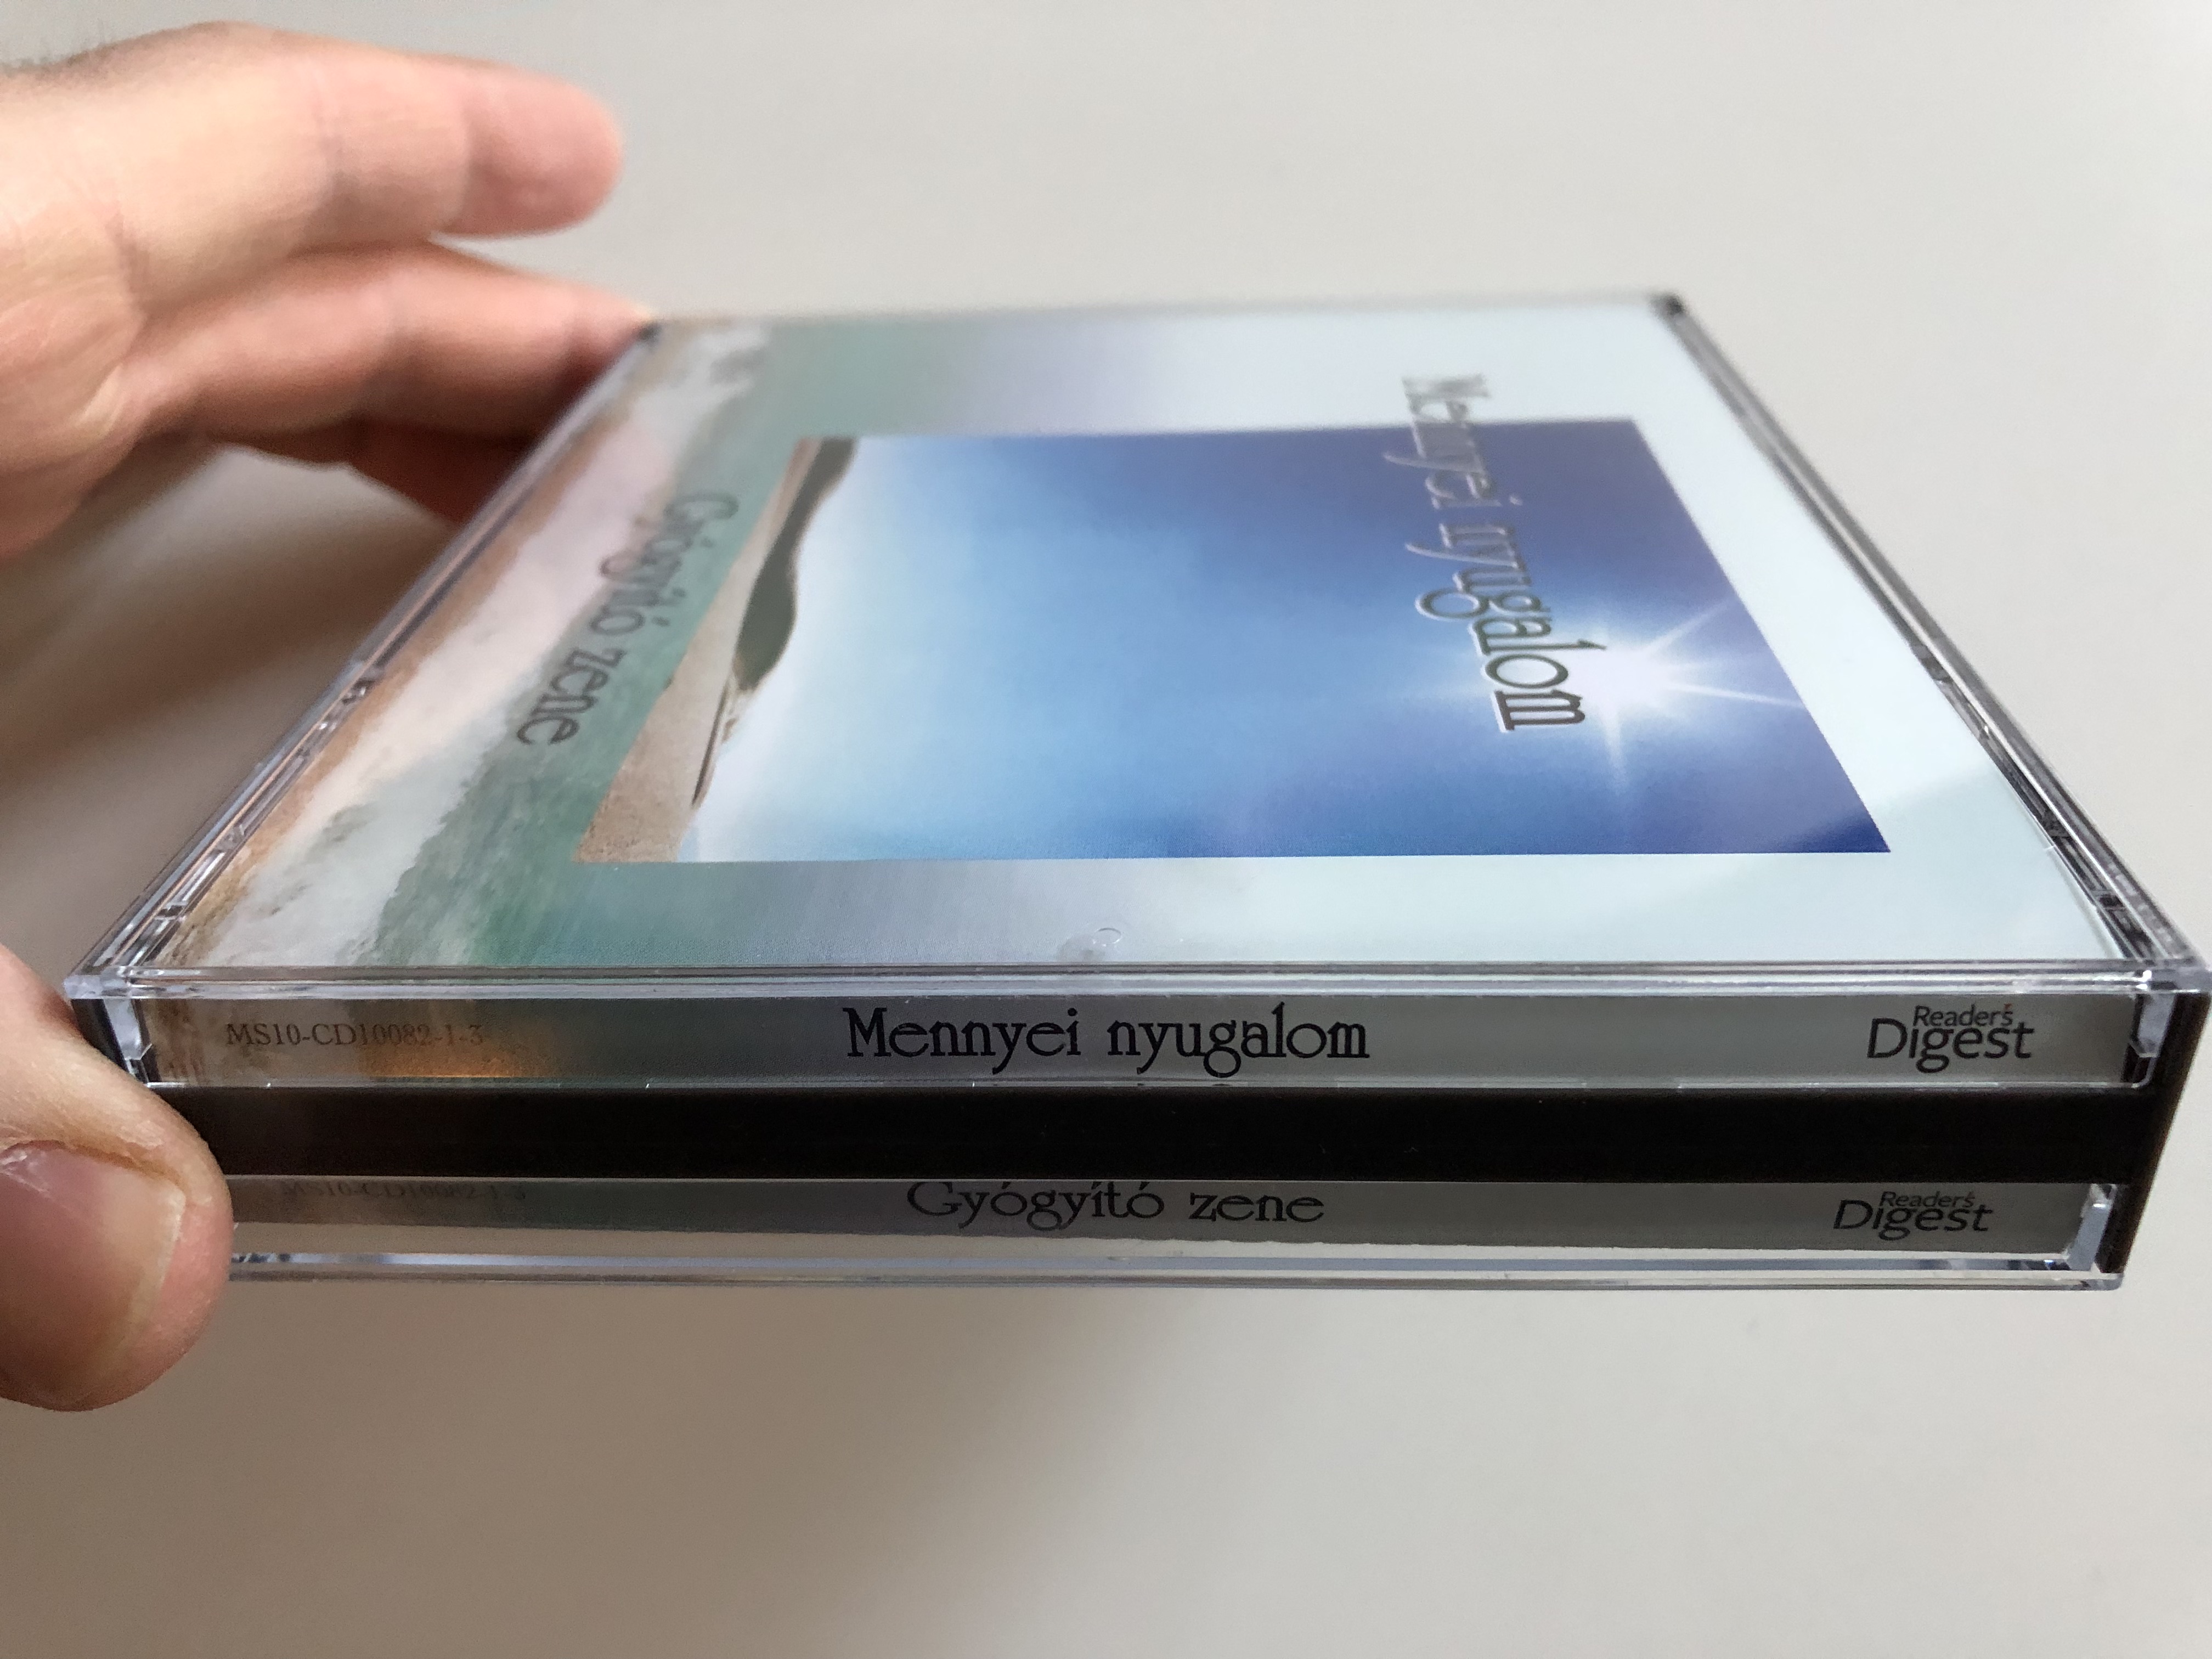 mennyei-nyugalom-gyogyito-zene-the-relaxation-company-3x-audio-cd-1996-ms10-cd10082-b-2-.jpg